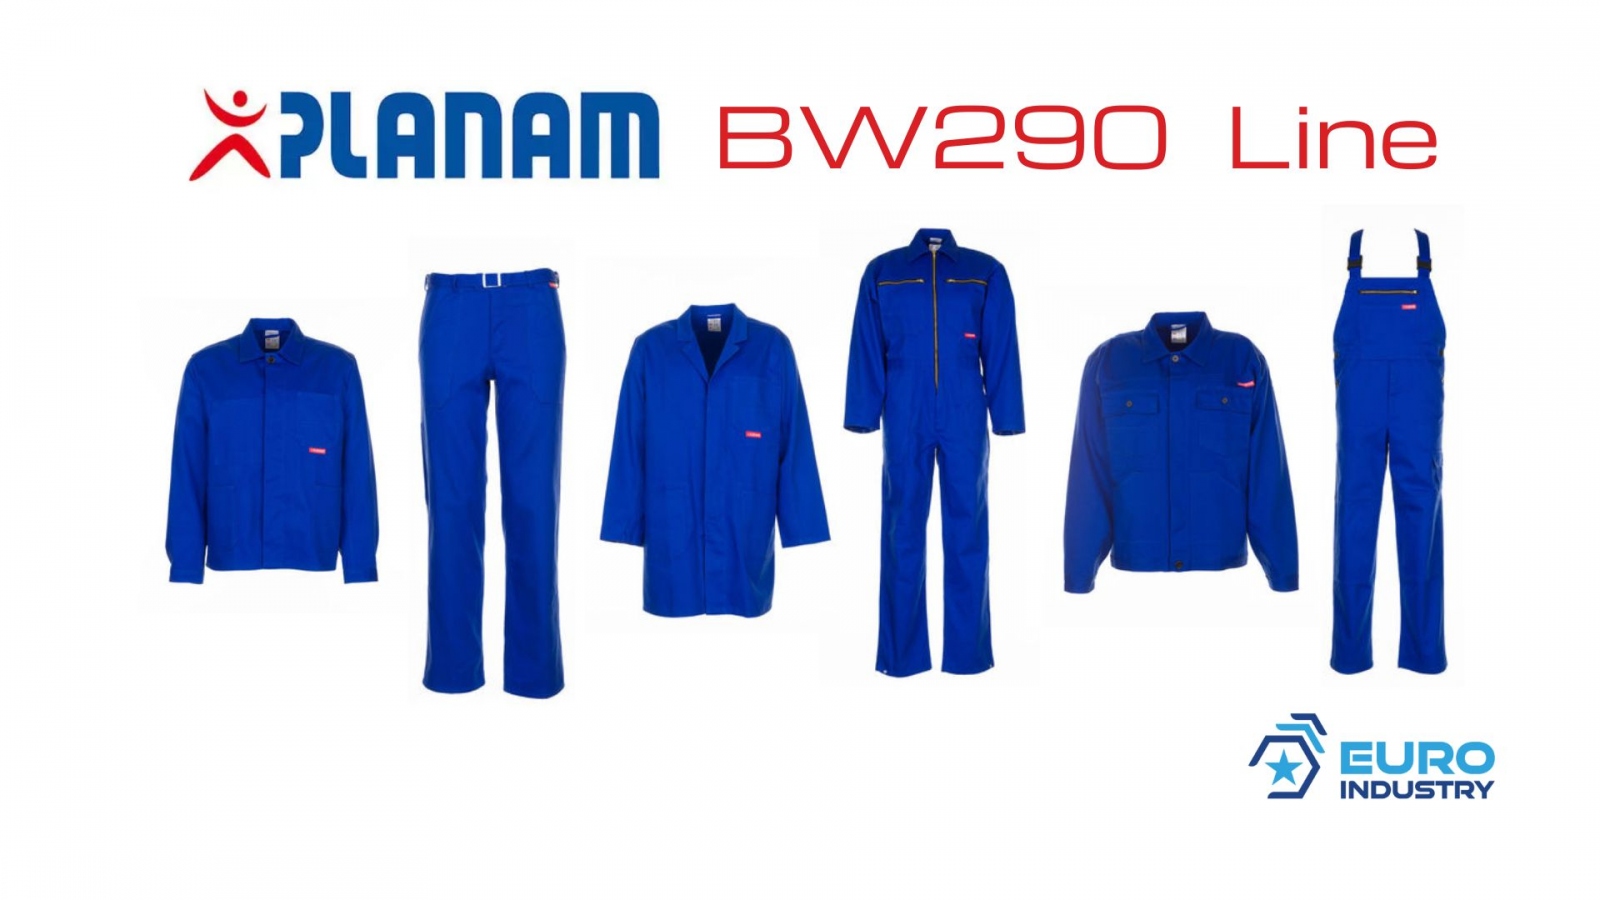 pics/Planam/planam-bw-290-linie-kornblau-baumwolle-details.jpg